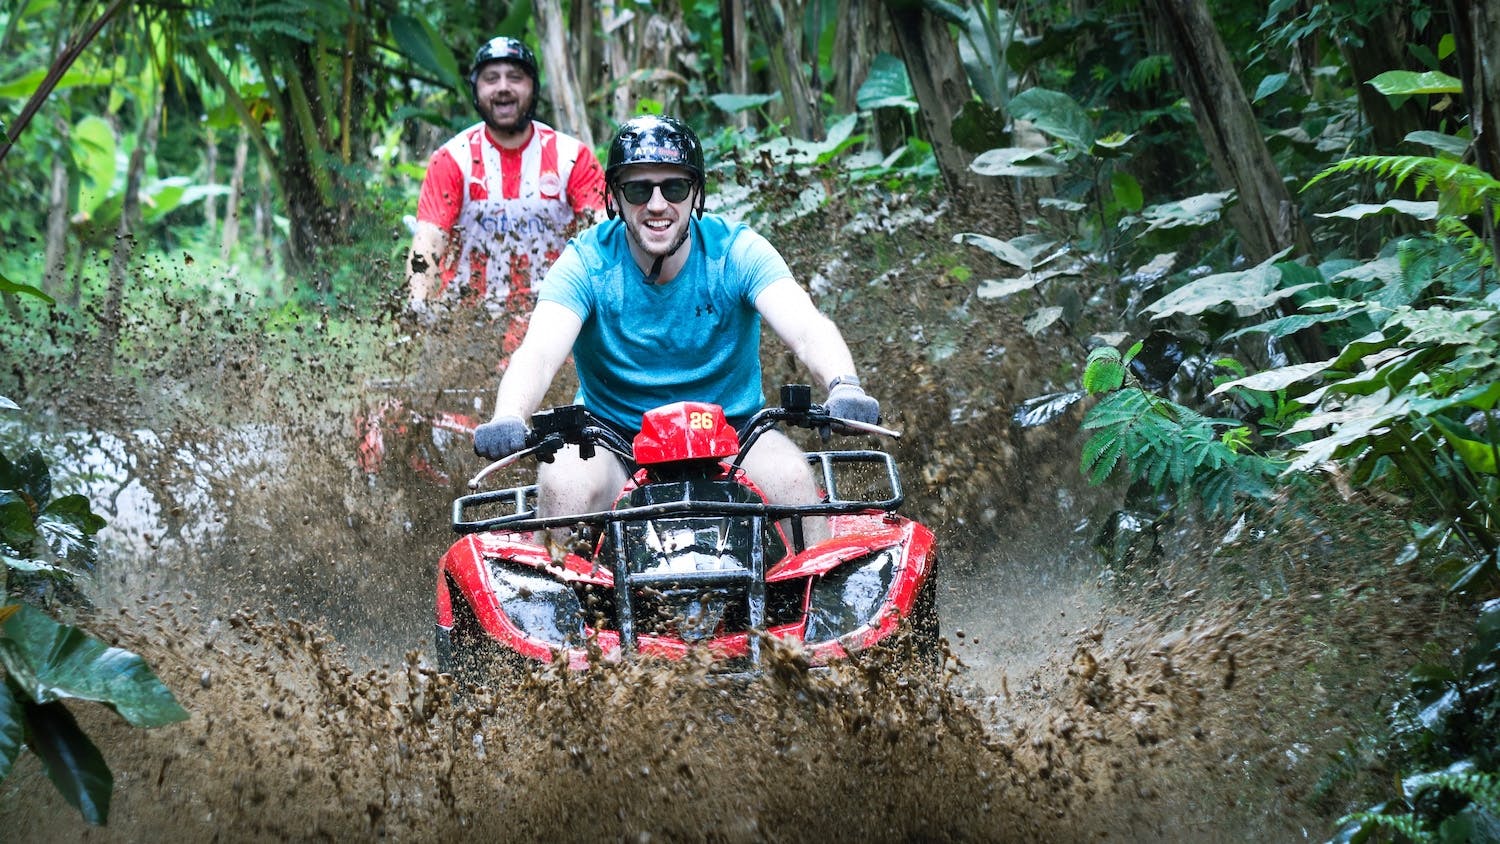 Bali Quad bike e aventura combinada de rafting